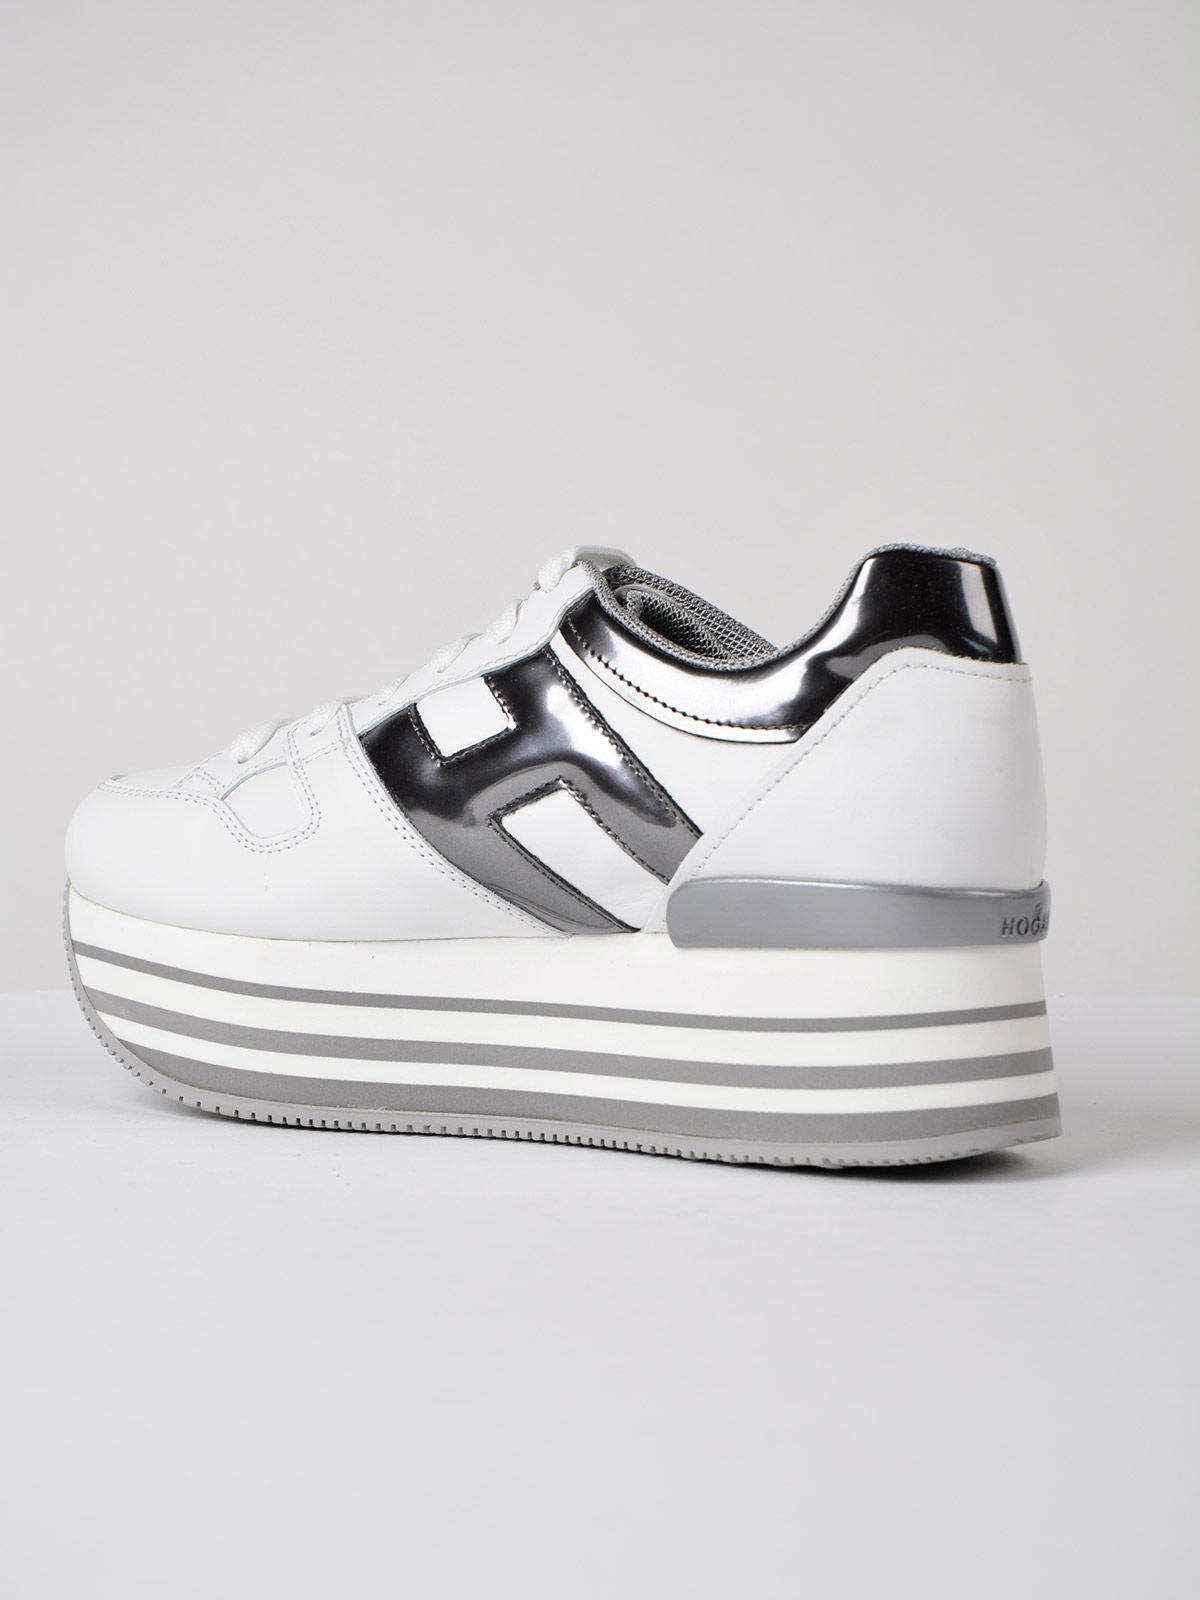 Hogan - Hogan Maxi H222 Platform Sneakers - White, Women's Sneakers ...